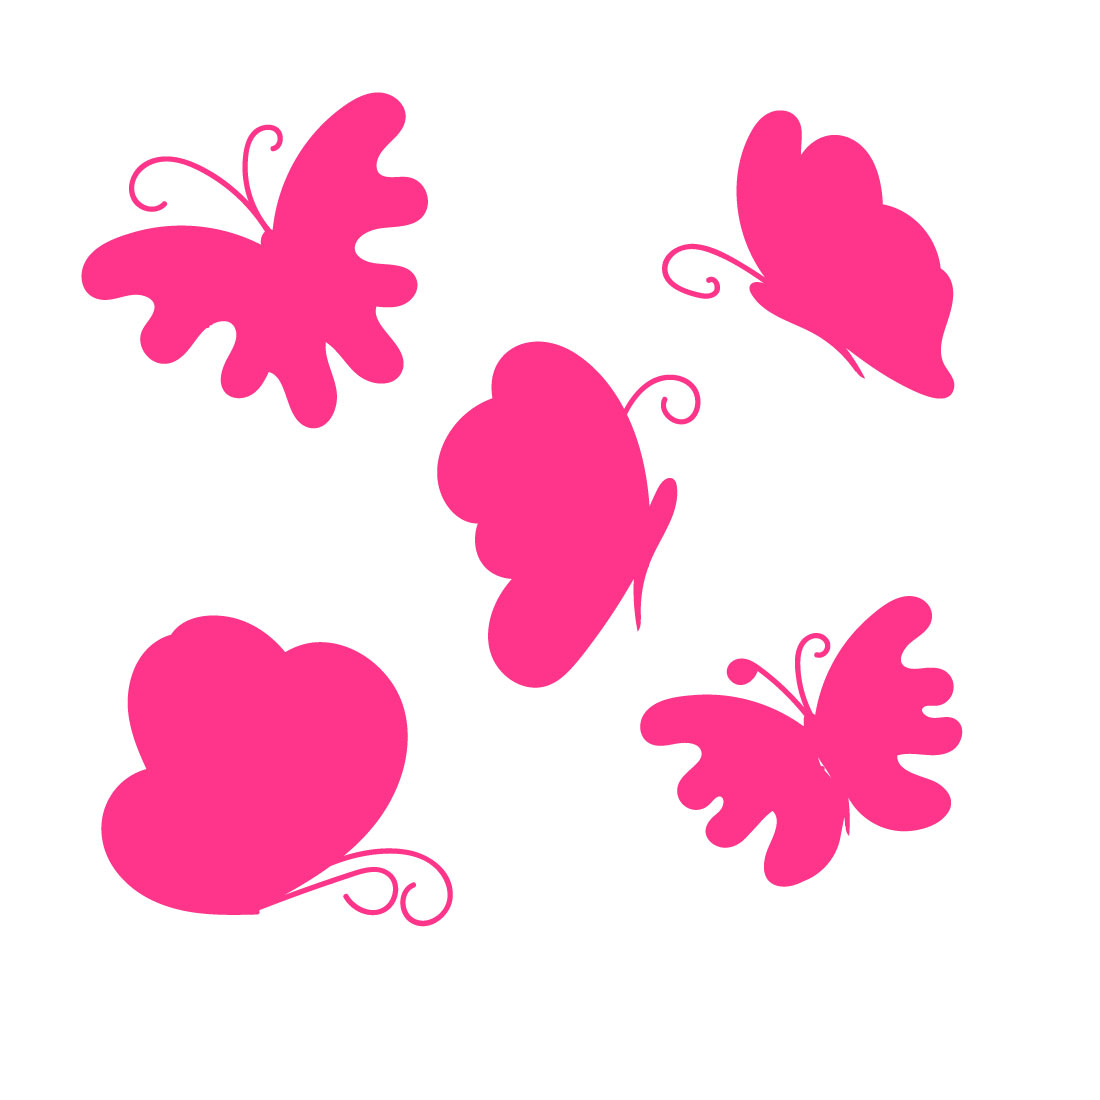 Butterfly Line Art SVG Bundle main cover